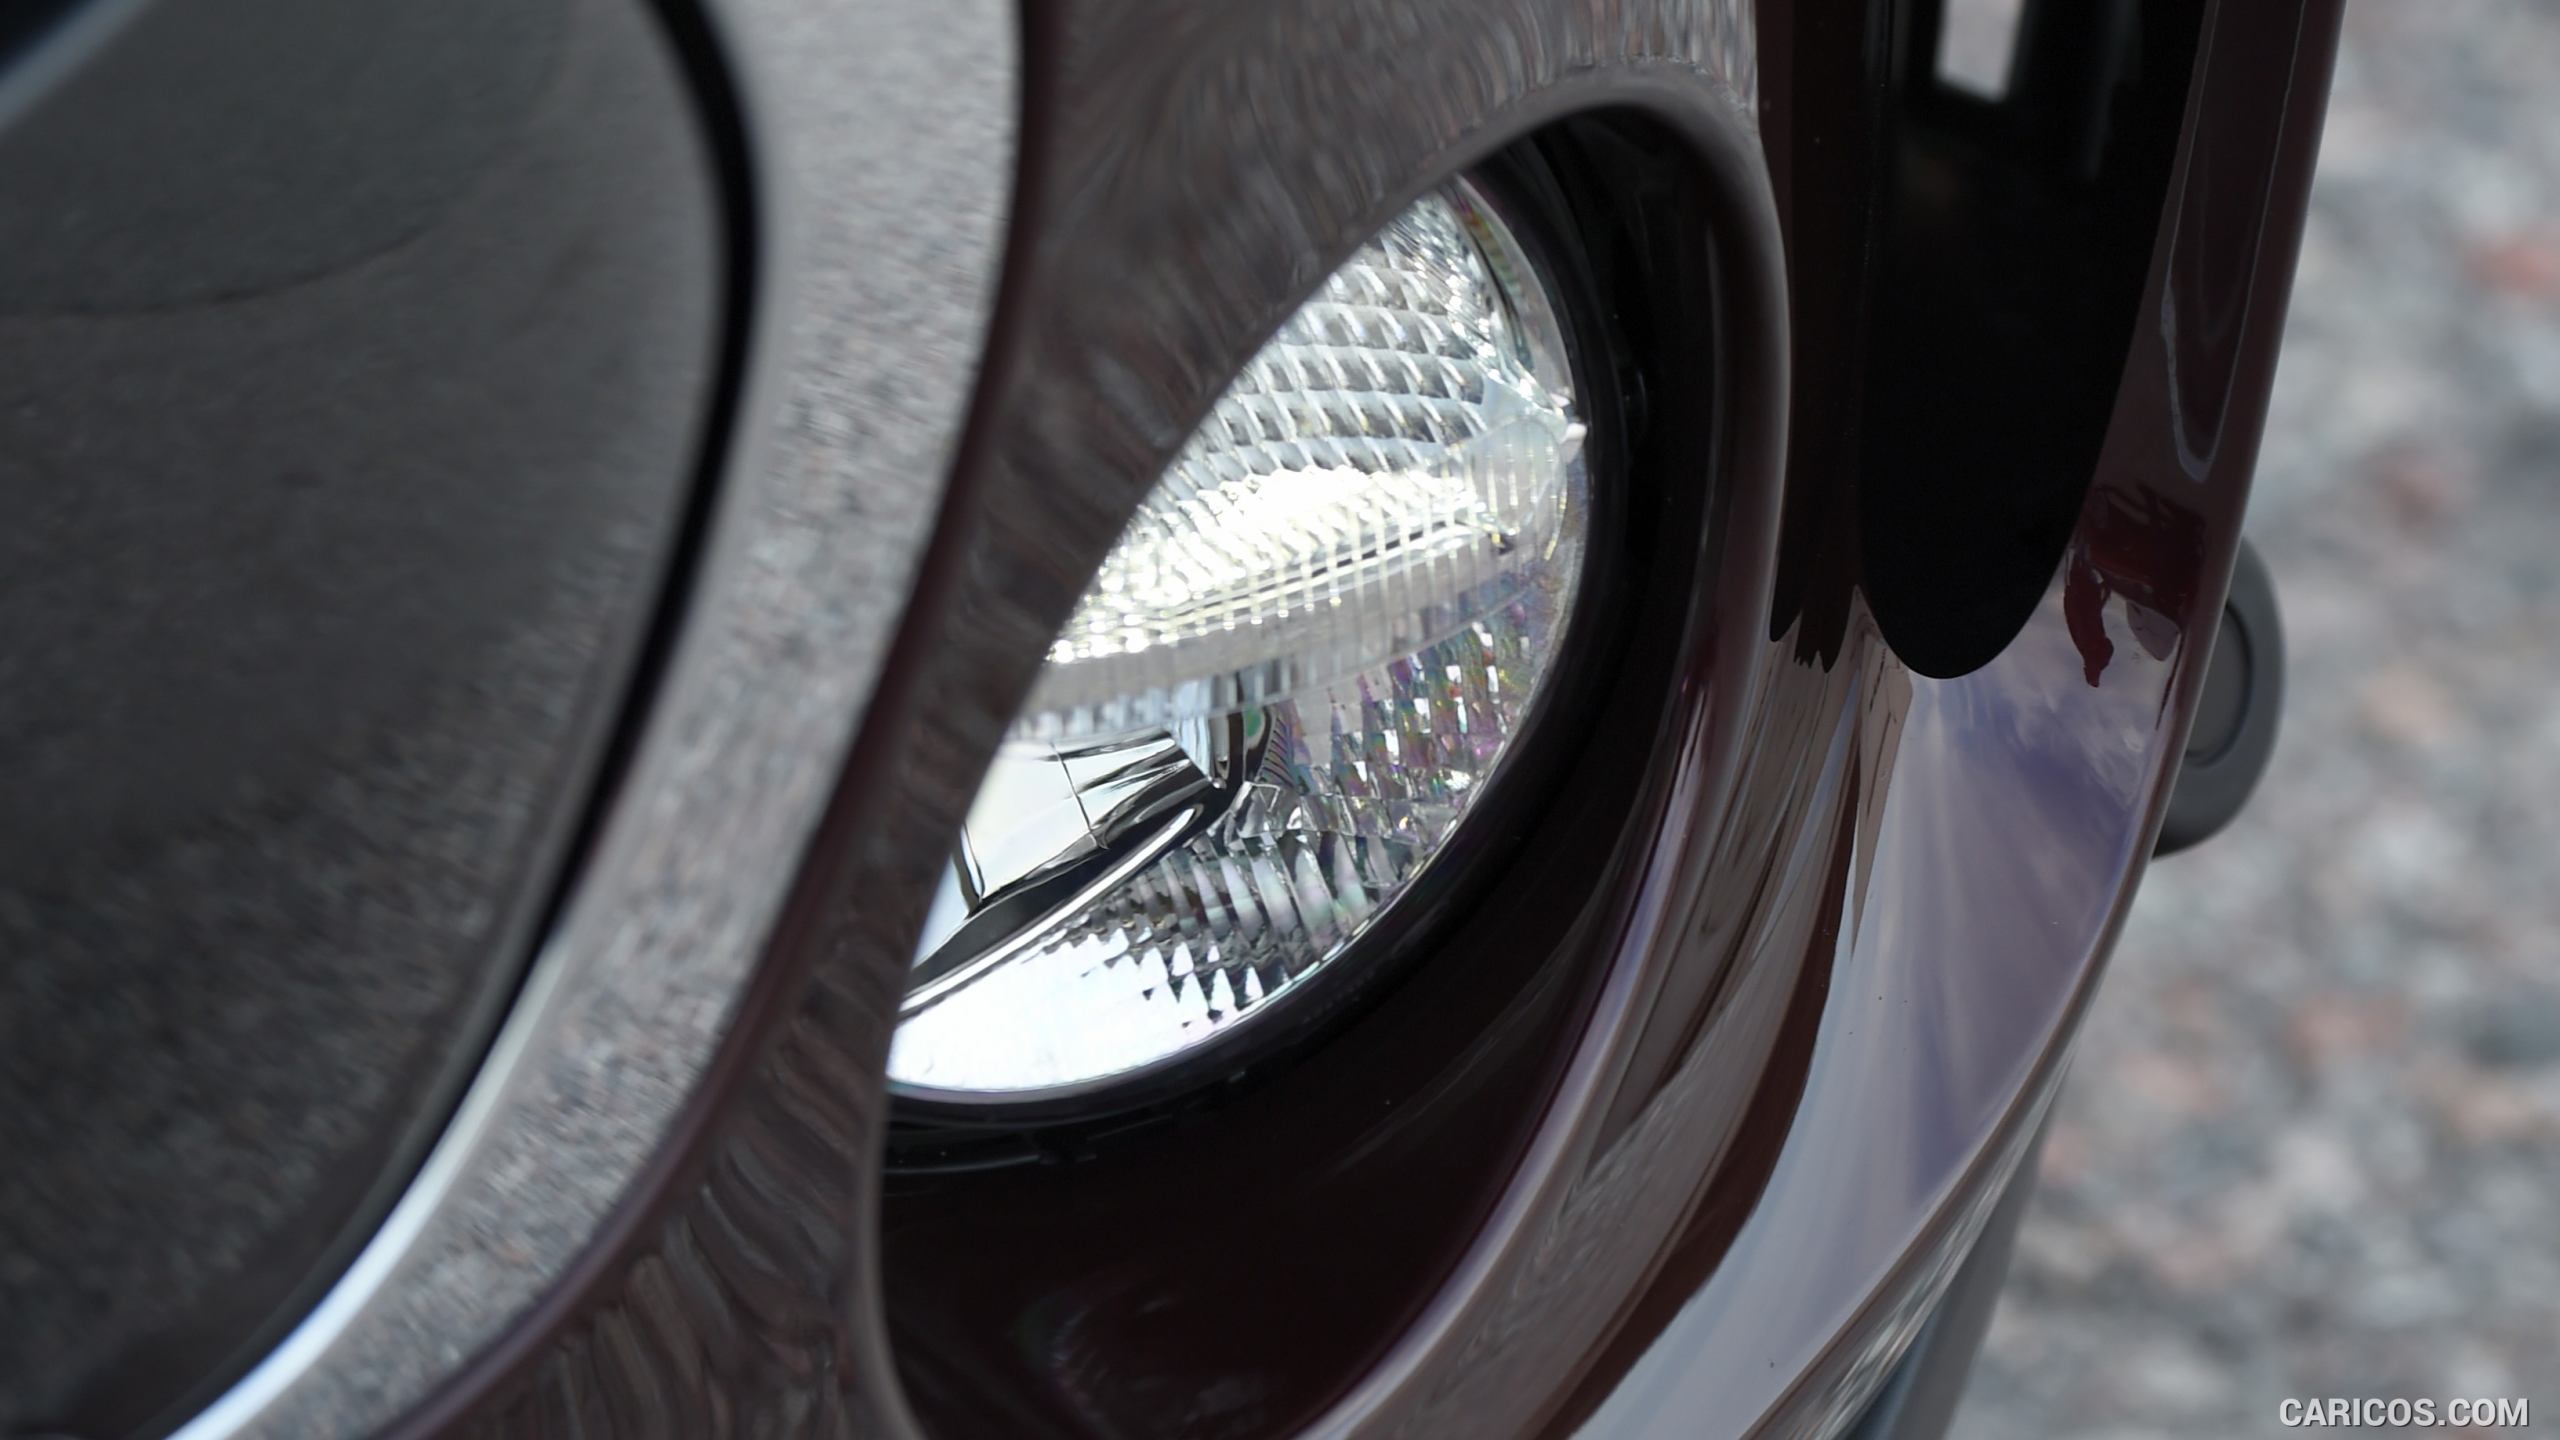 2016 MINI Cooper S Clubman in Metallic Pure Burgundy - Detail, #344 of 380